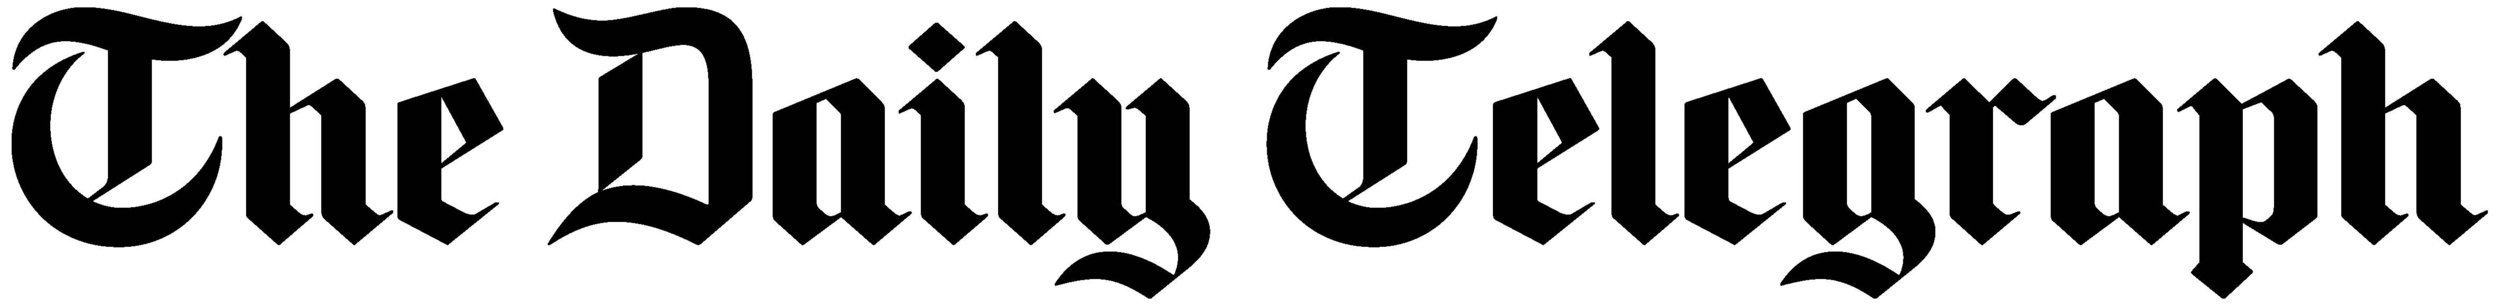 The-Daily-Telegraph-Logo.jpg